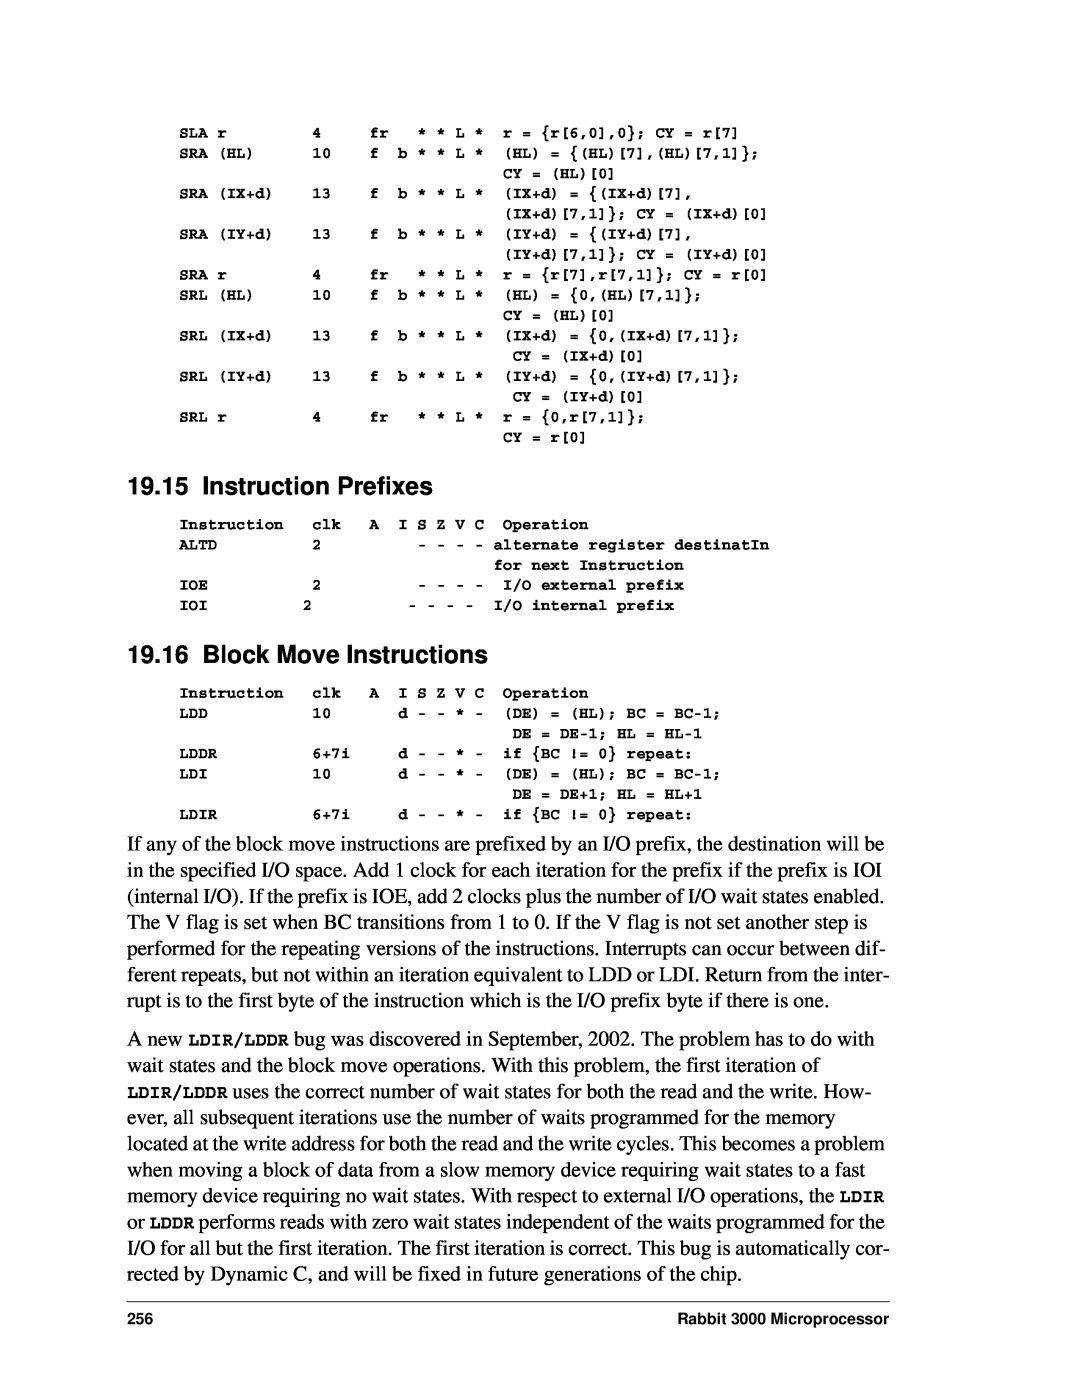 Jameco Electronics 2000, 3000 manual Instruction Prefixes, Block Move Instructions 